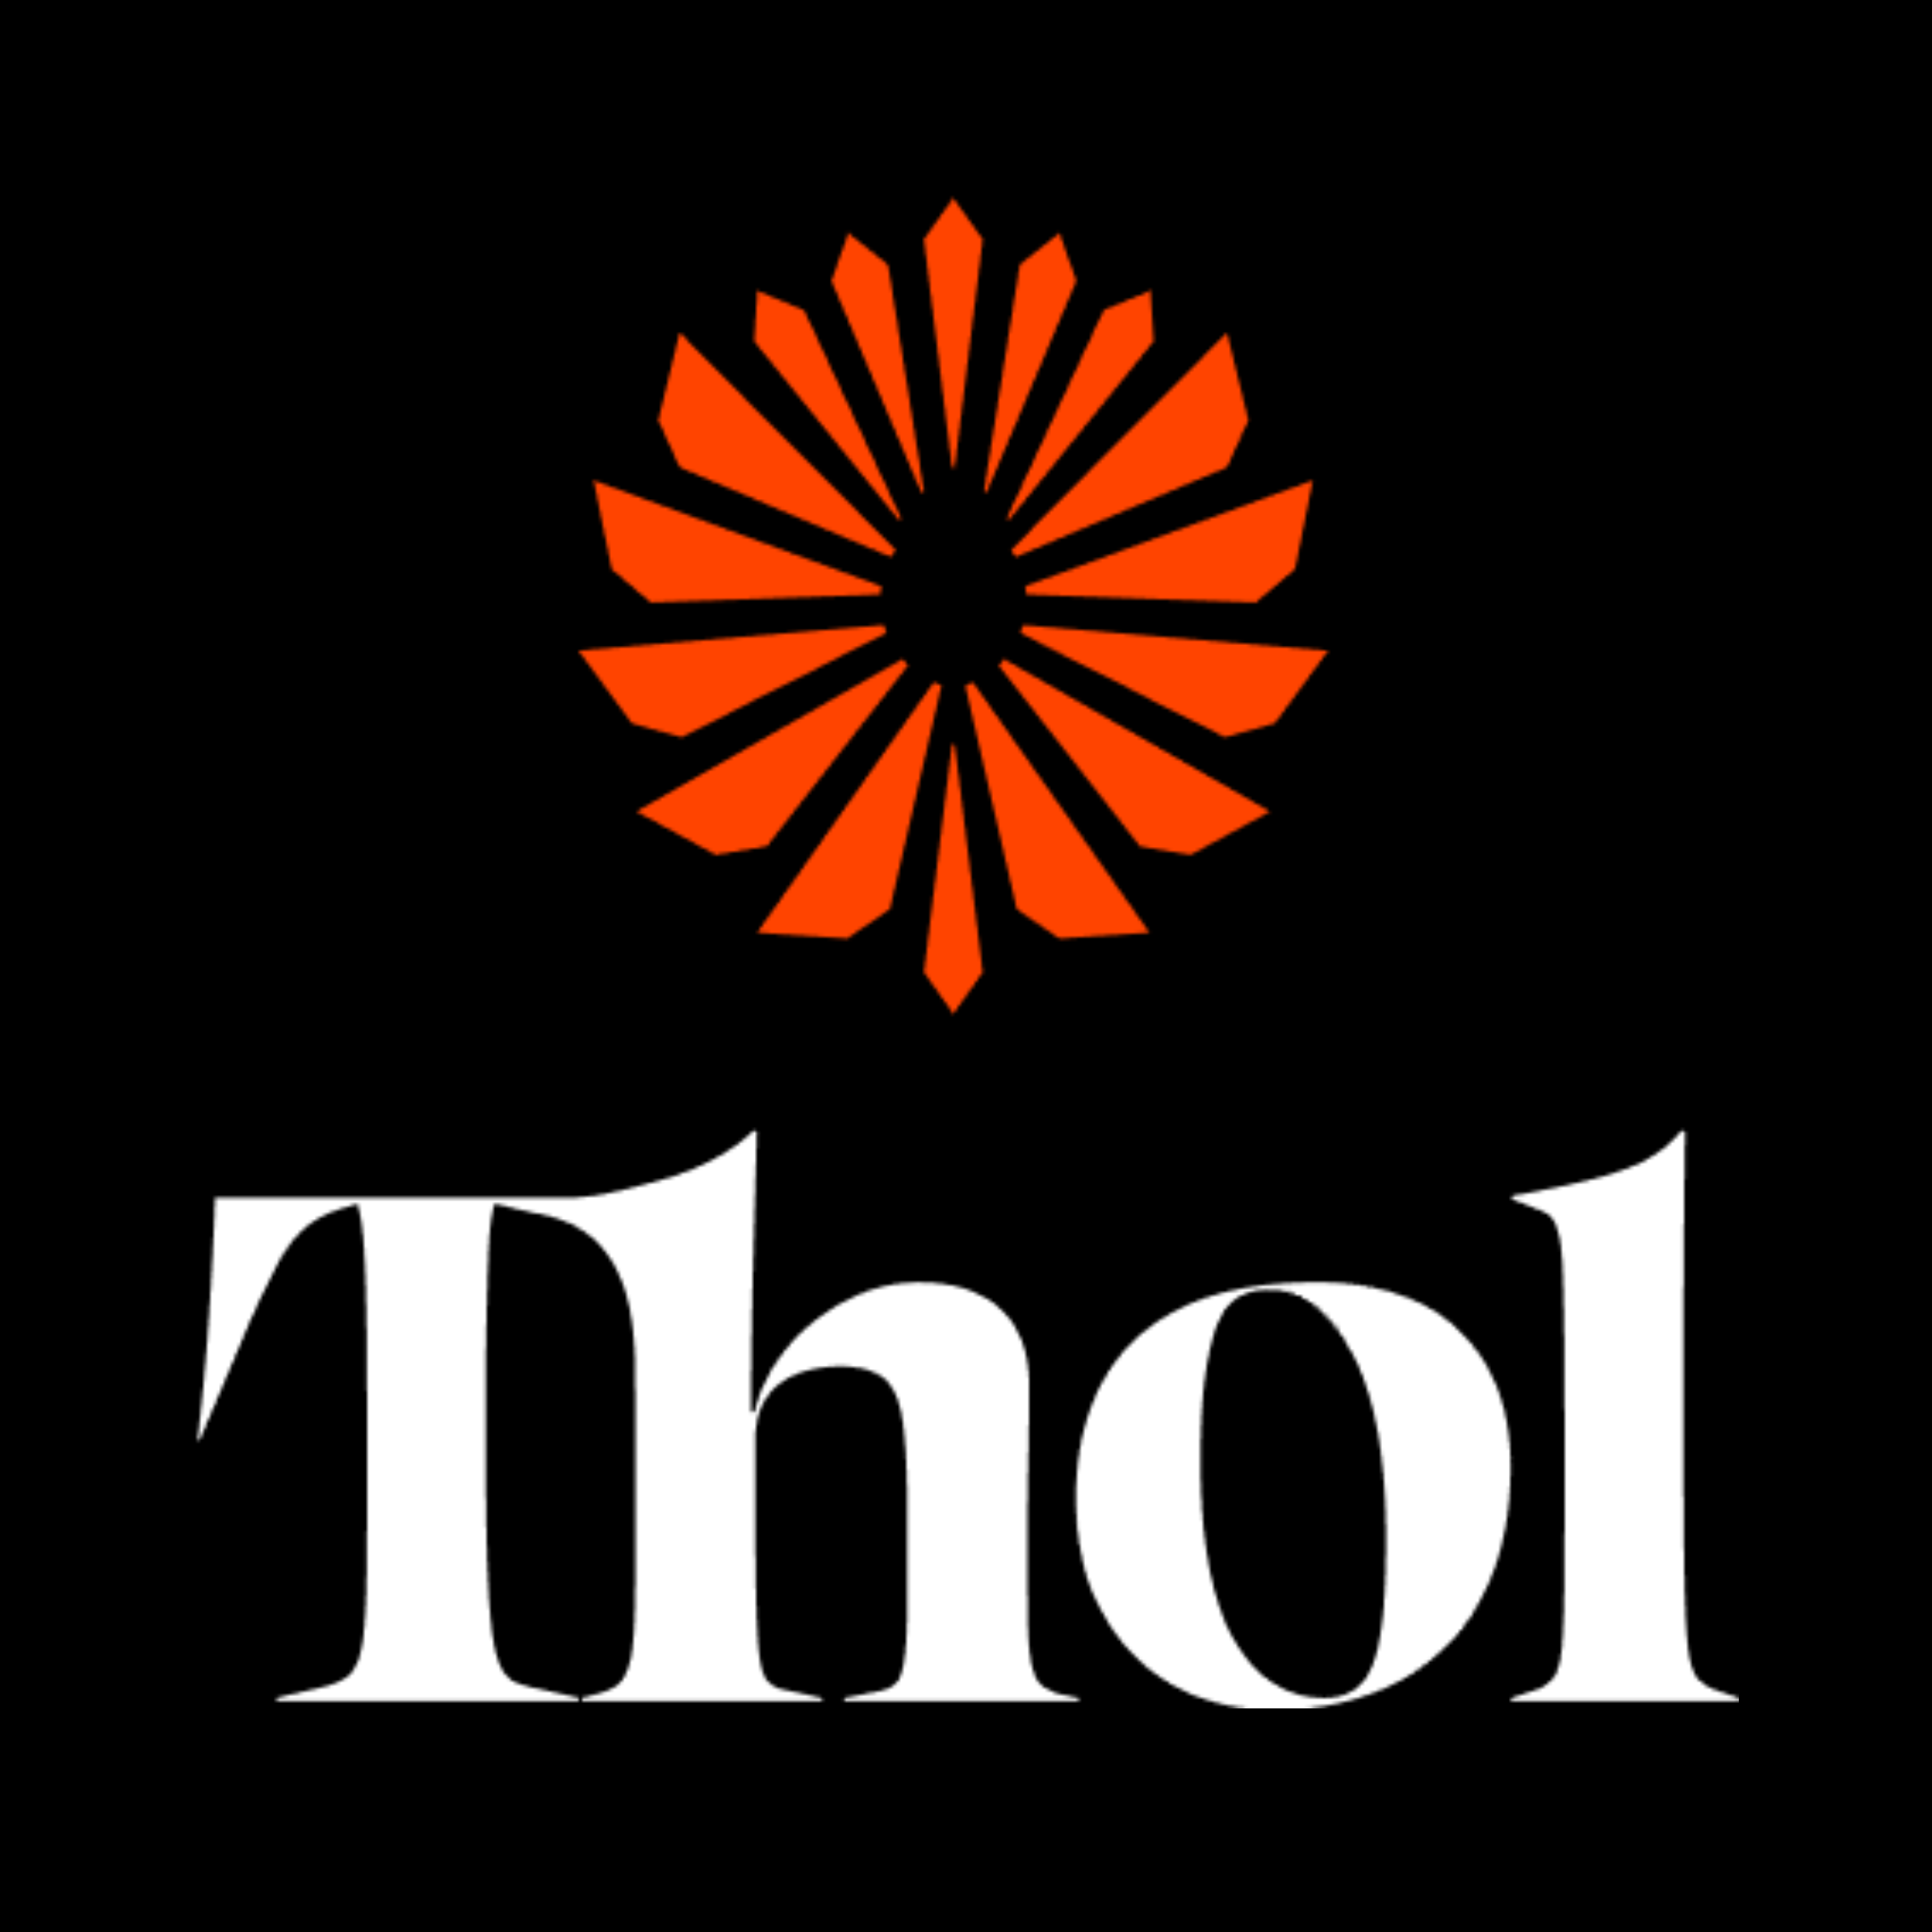 An image of Thol's logo.